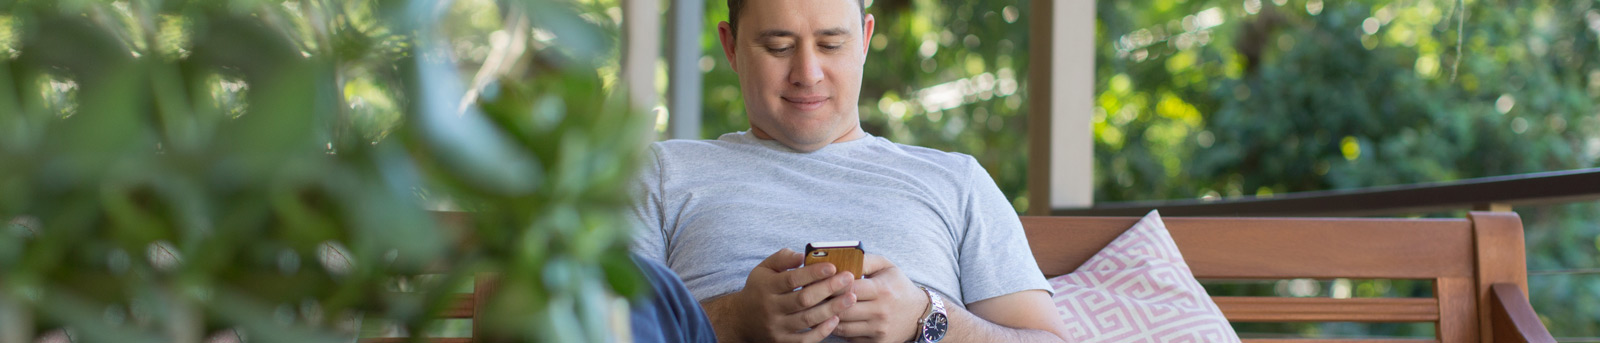 Man sitting on bench smiling at mobile phone